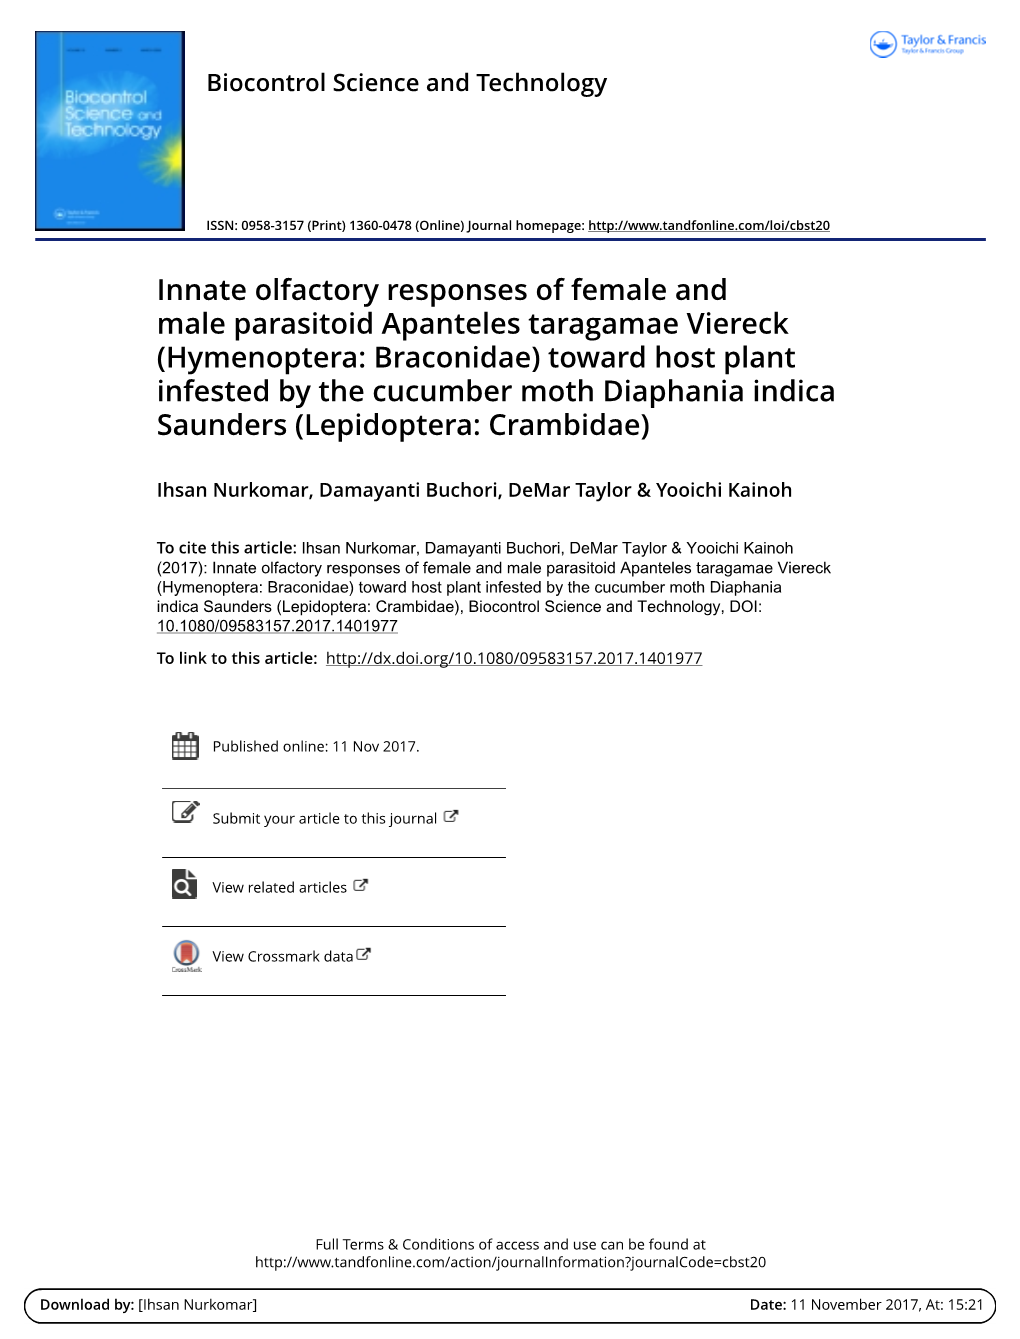 Innate Olfactory Responses of Female and Male Parasitoid Apanteles